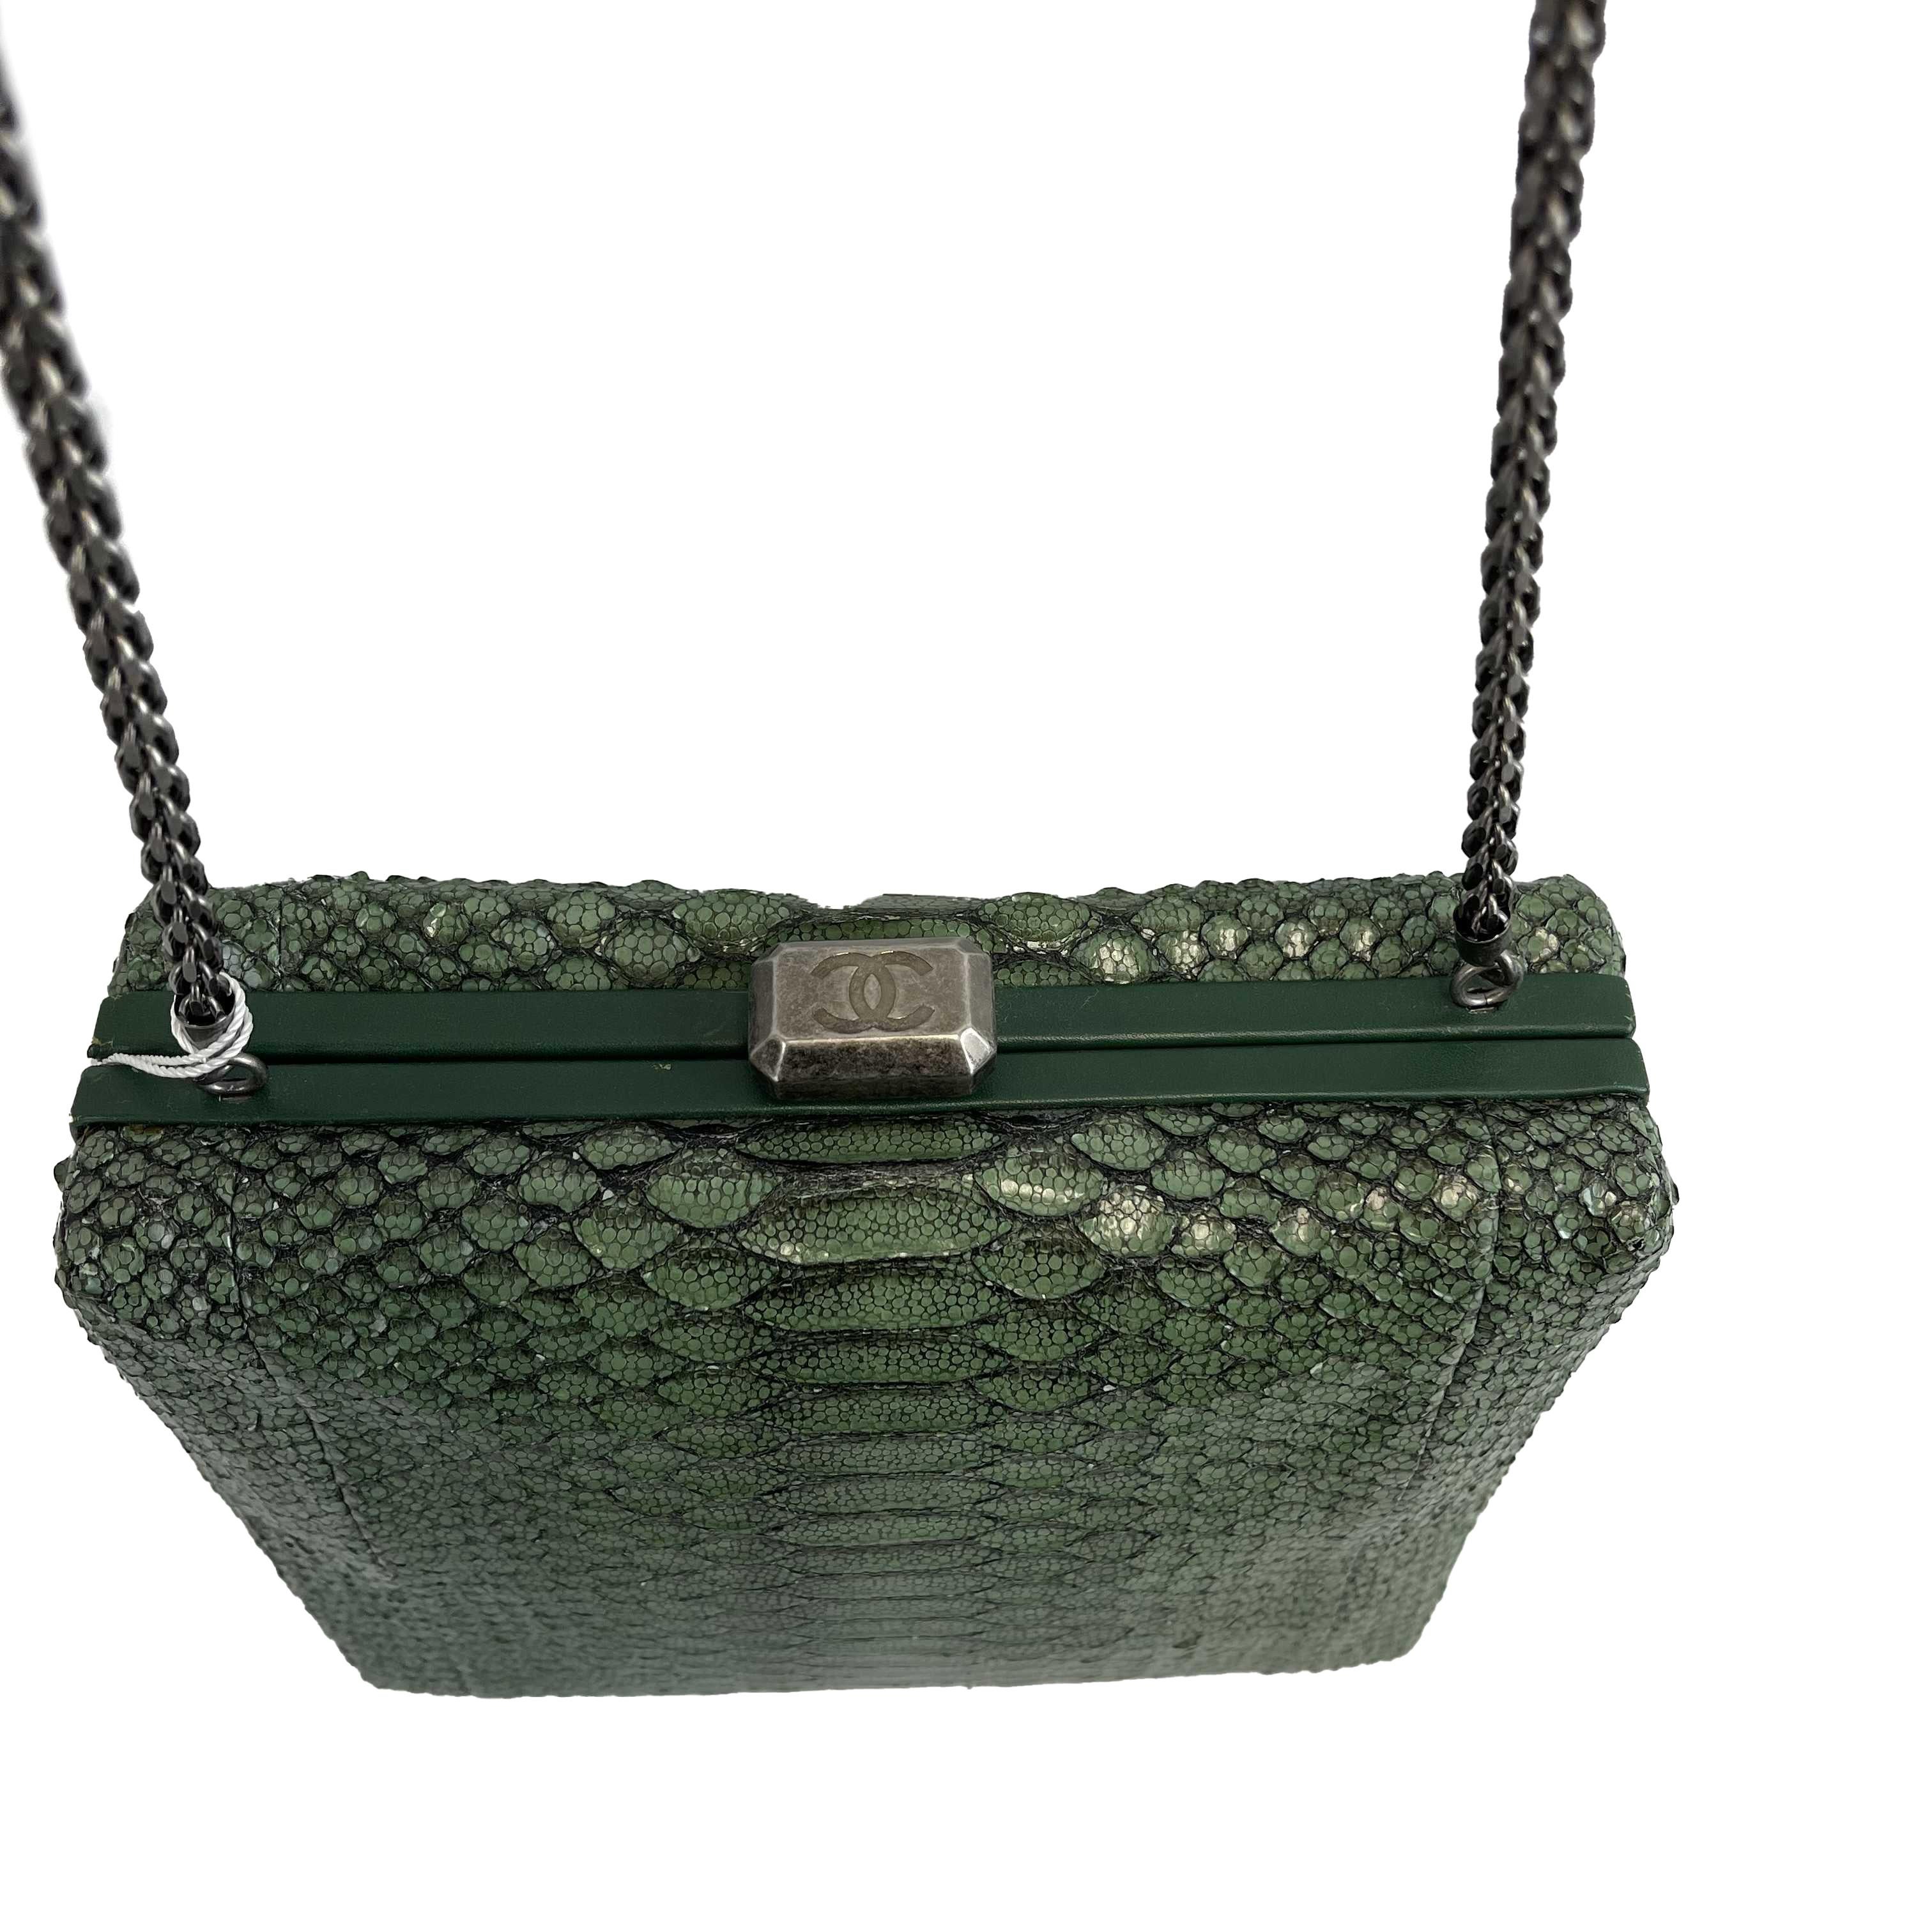 CHANEL - Python Snakeskin Green CC Kiss lock Shoulder Bag / Crossbody For Sale 4